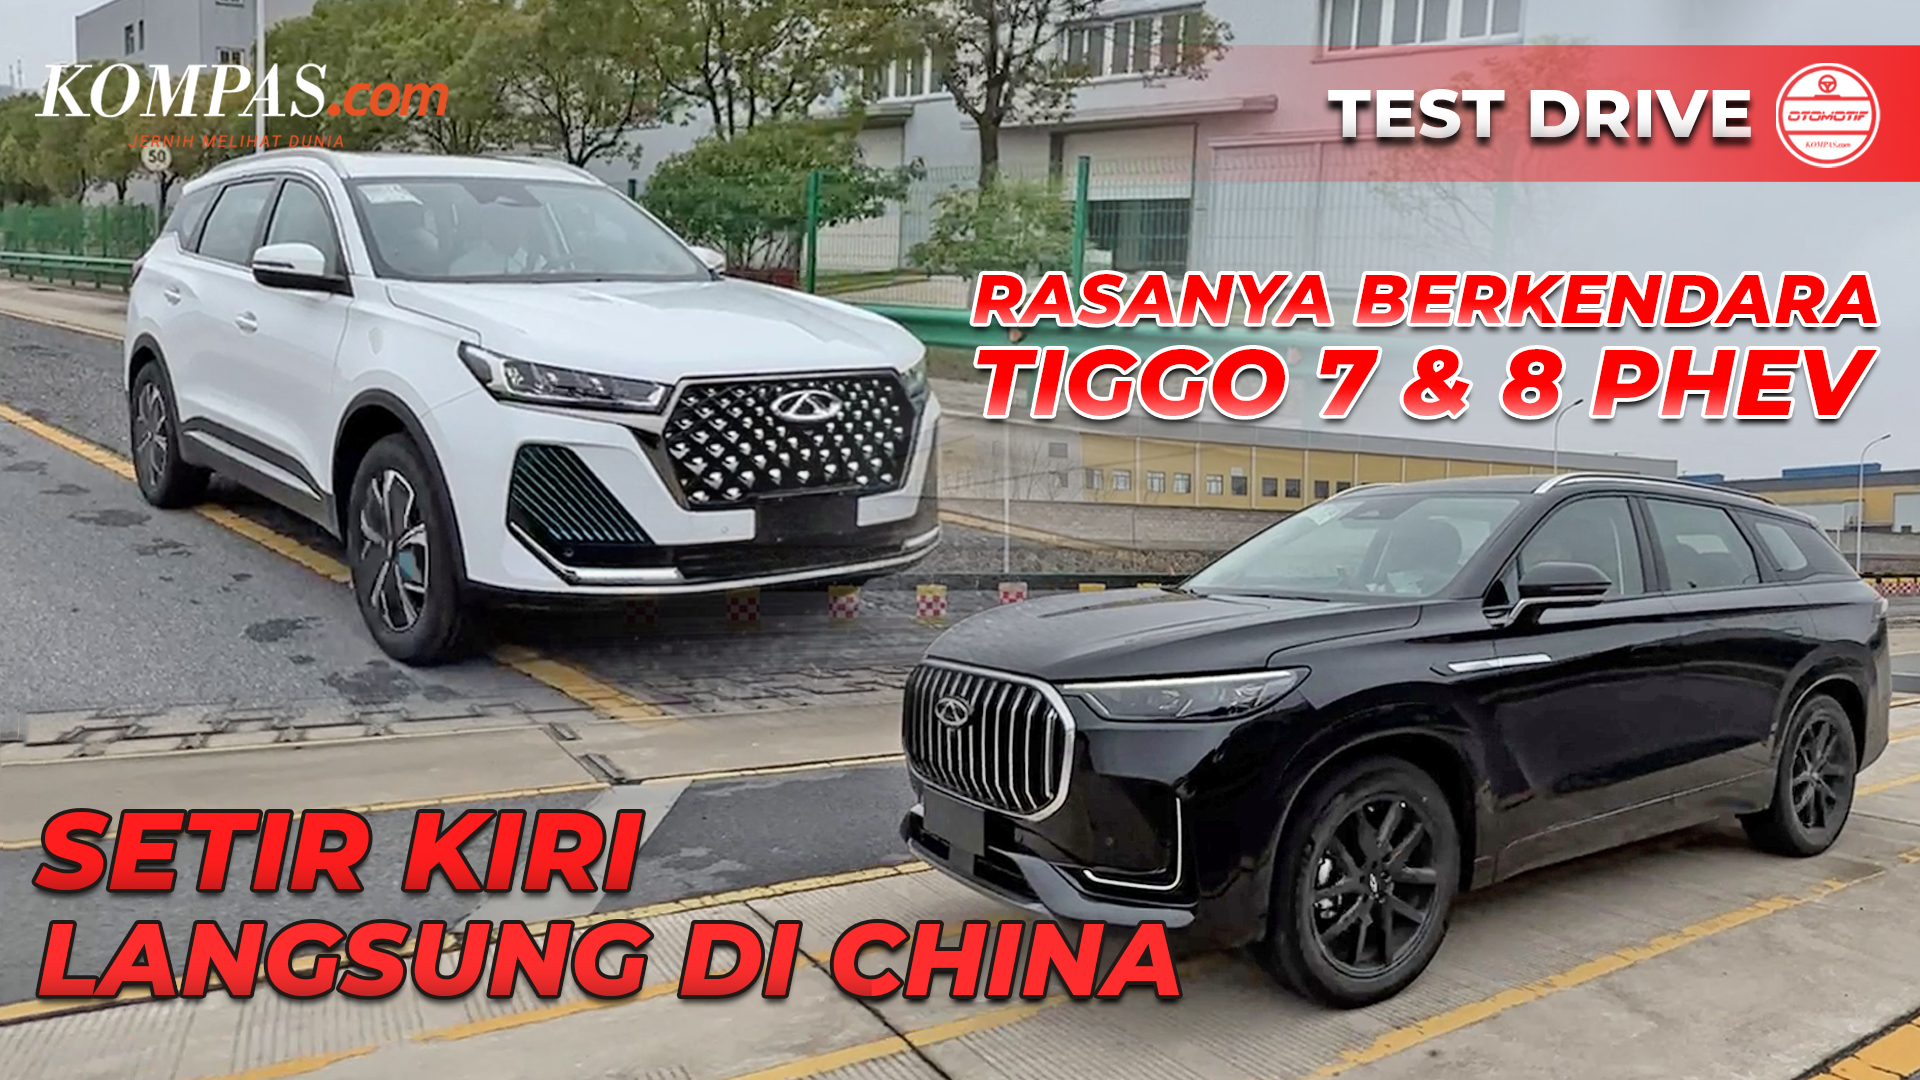 TEST DRIVE | Rasanya Berkendara Tiggo 7 & 8 Pro PHEV Setir Kiri Langsung di China